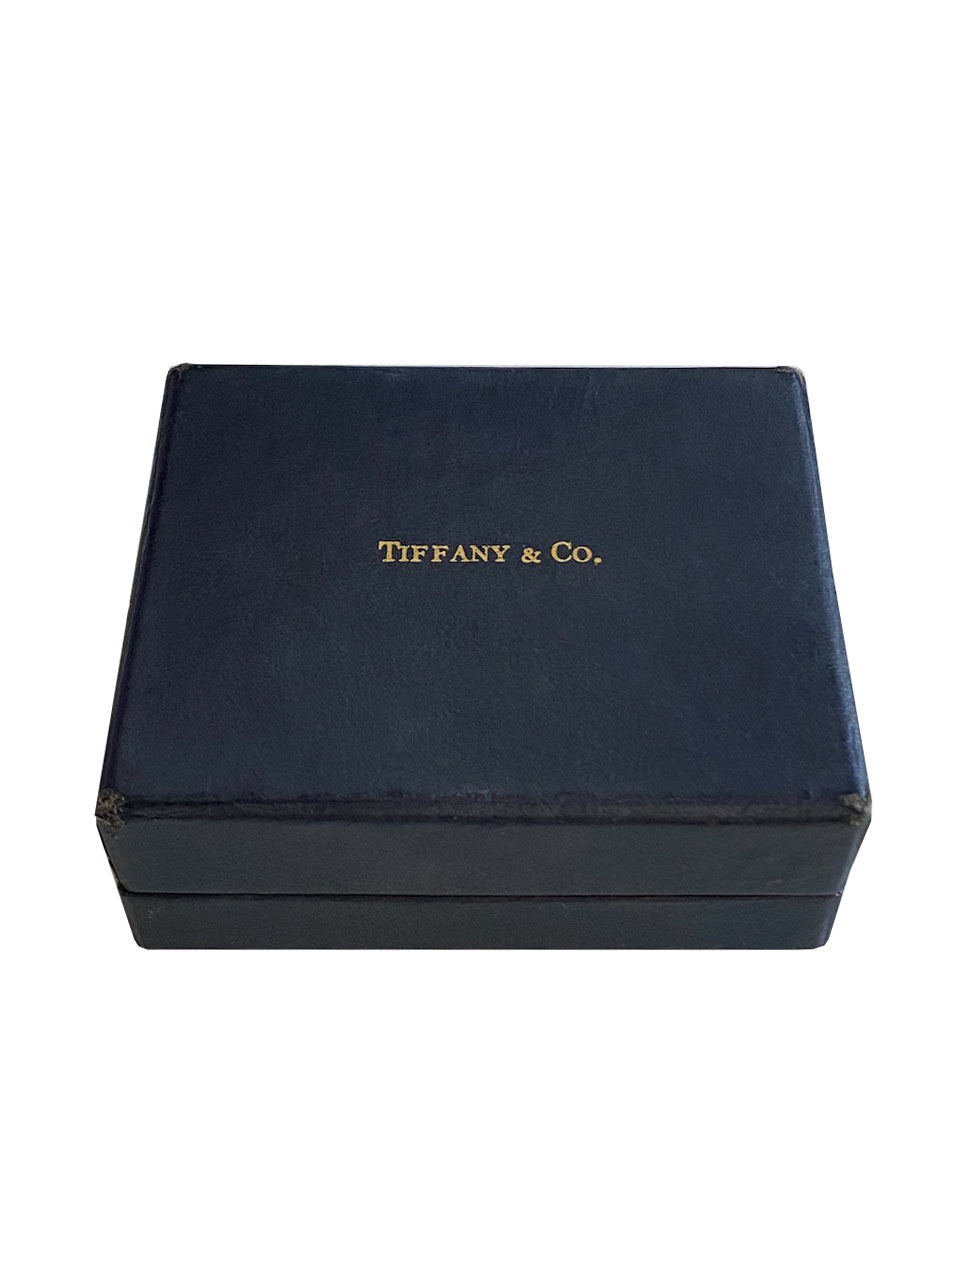 Tiffany Co. Jewellery Carton 1980s - Gisbert A. Joseph Watches